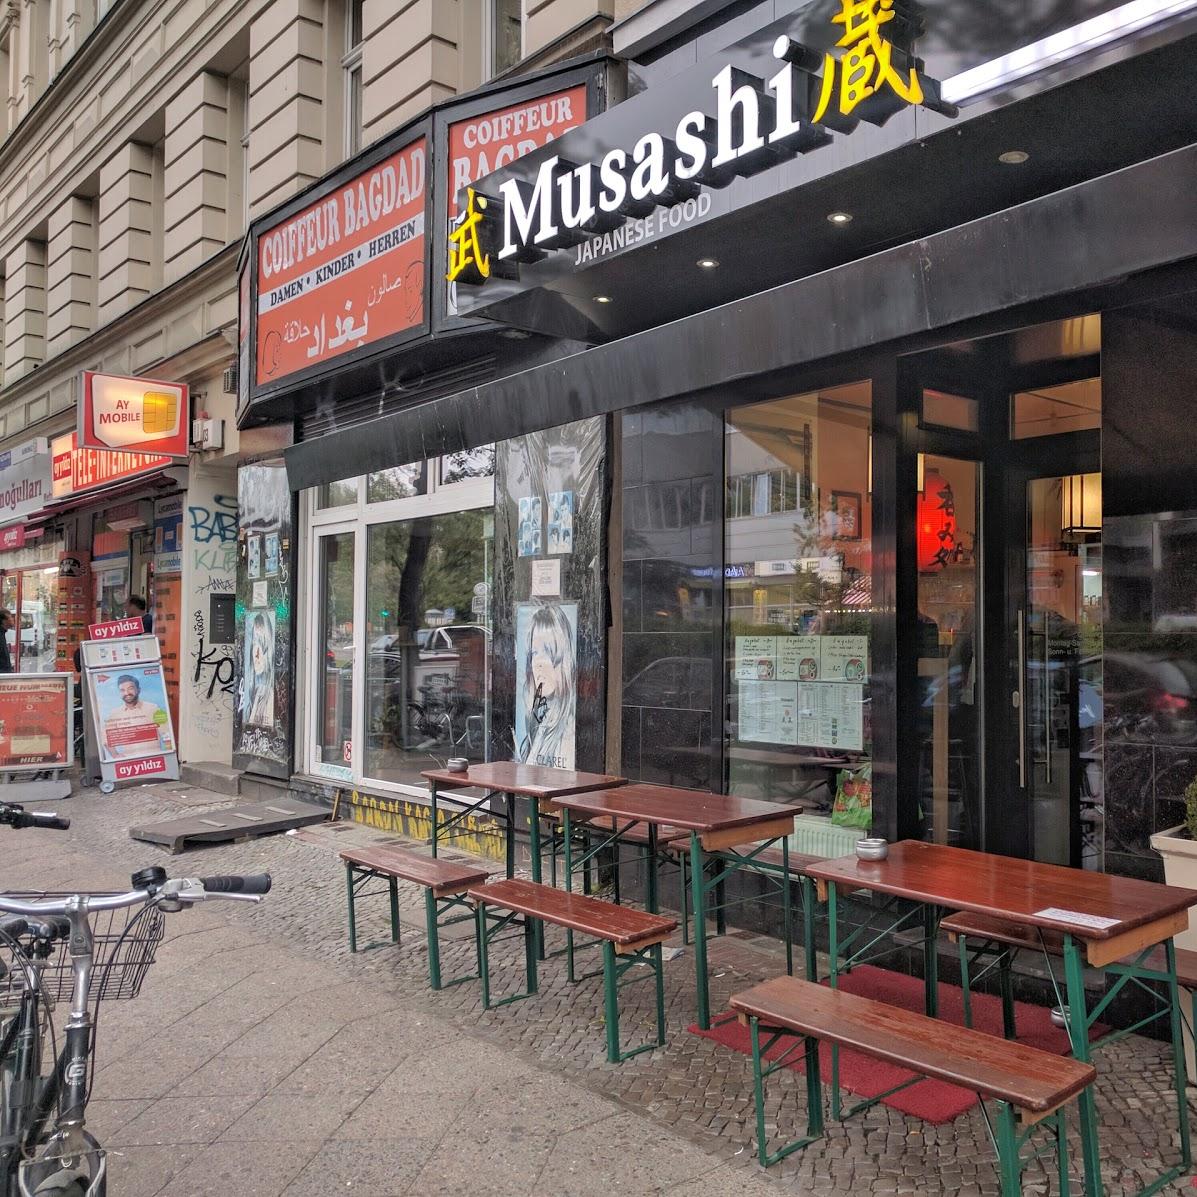 Restaurant "Musashi" in Berlin